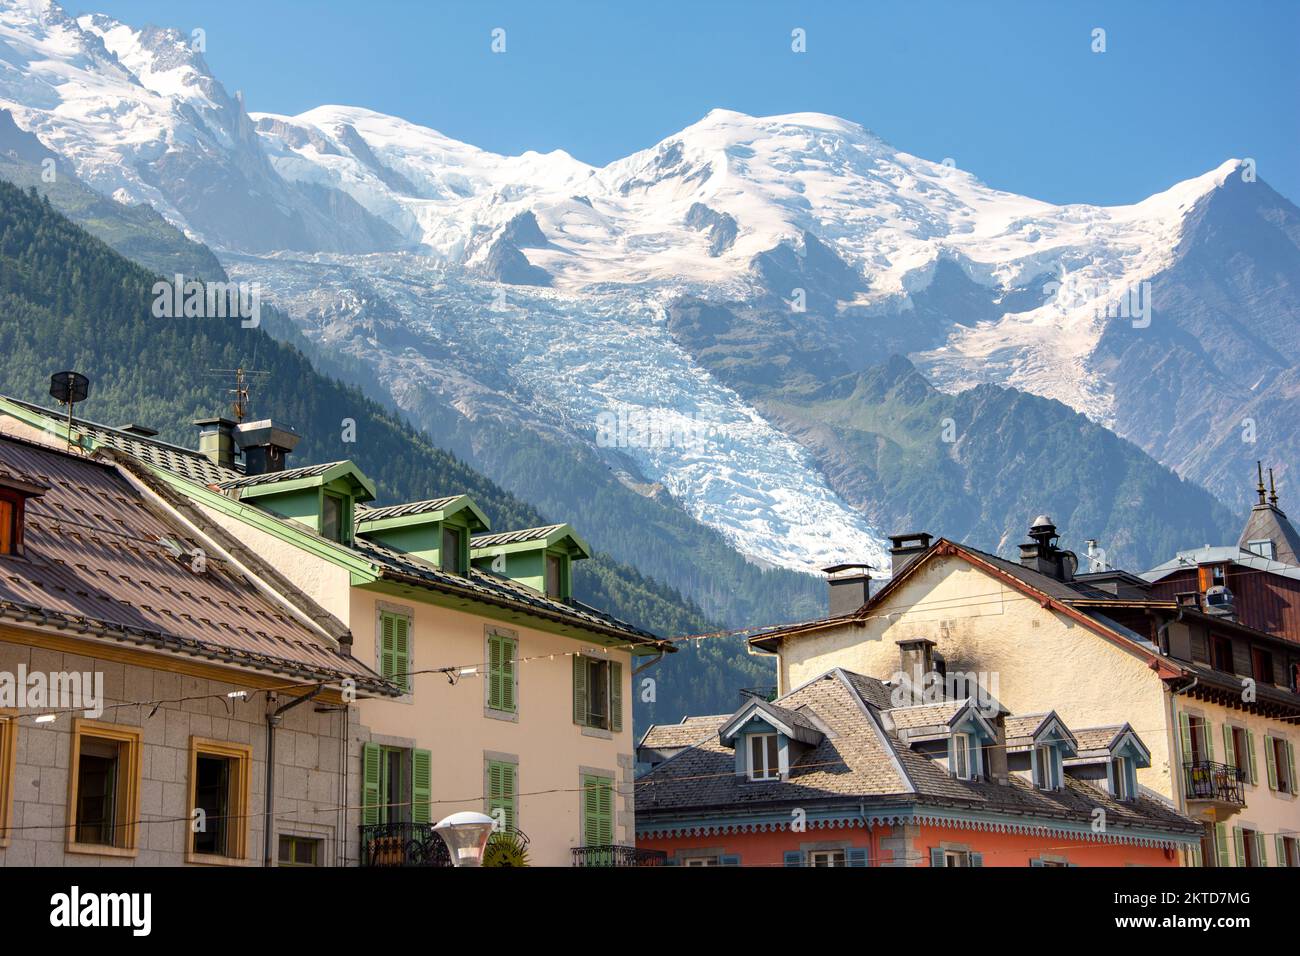 Chamonix Mont Blanc, famous ski resort in Alps mountains, France. Stock Photo